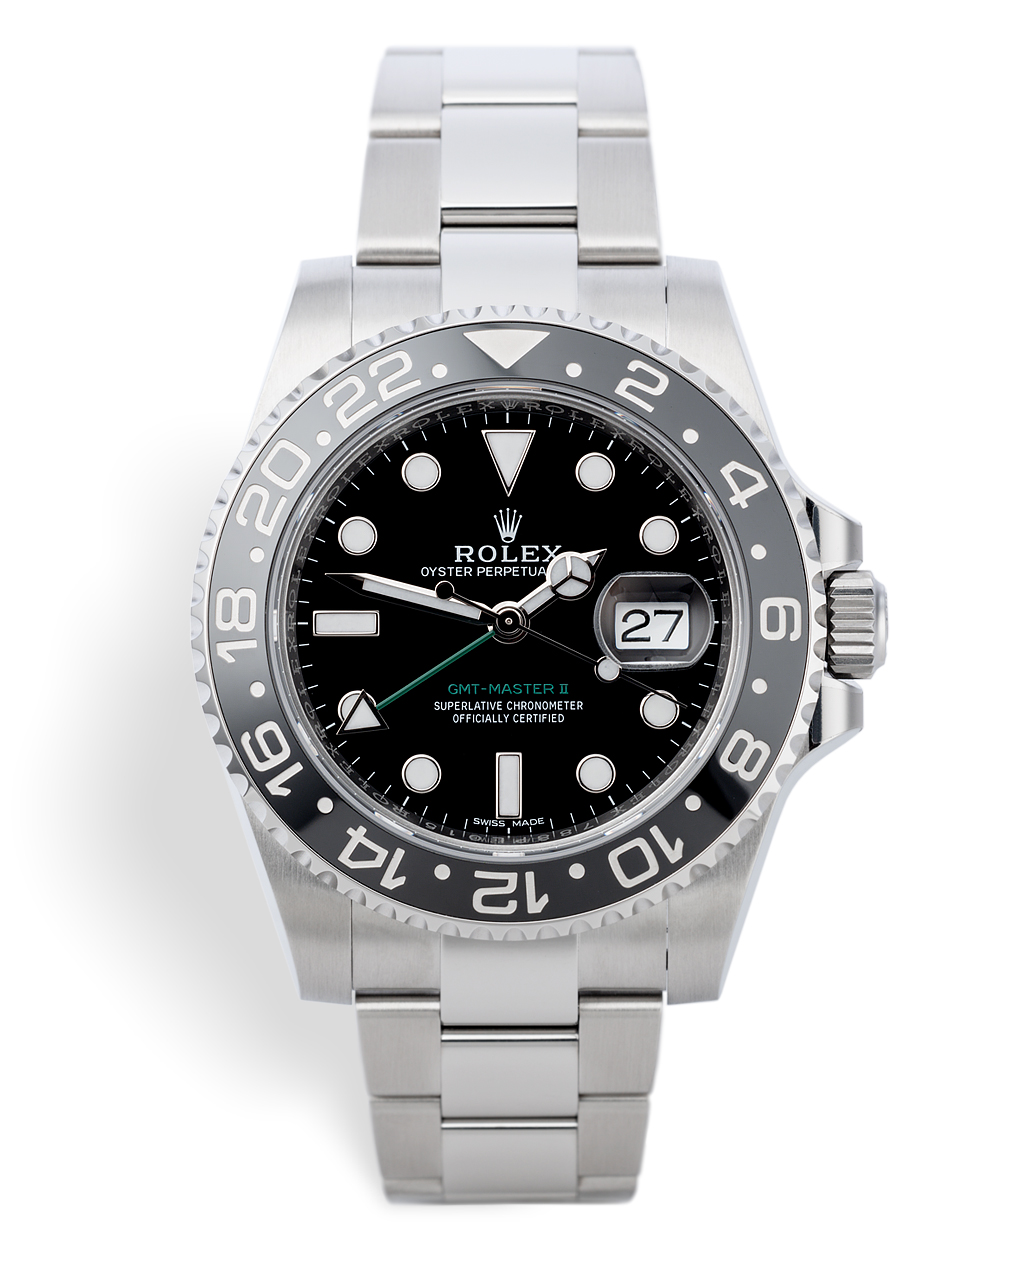 Rolex GMTMaster II Watches ref 116710LN Rolex Warranty to June